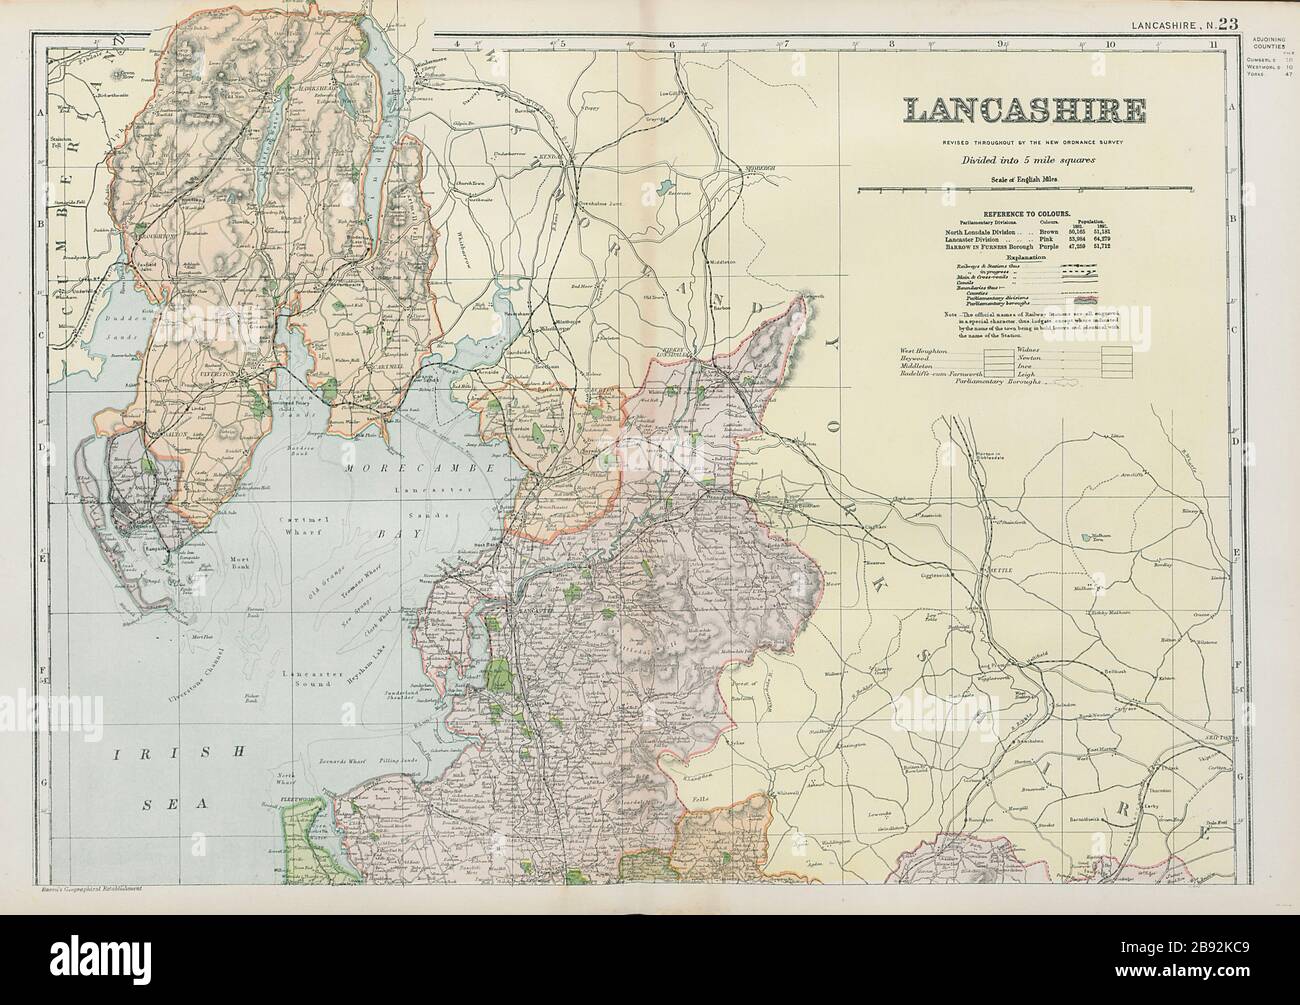 Greenhalgh 51SE repro Old map of Wheeton Esprick Lancashire in 1912 